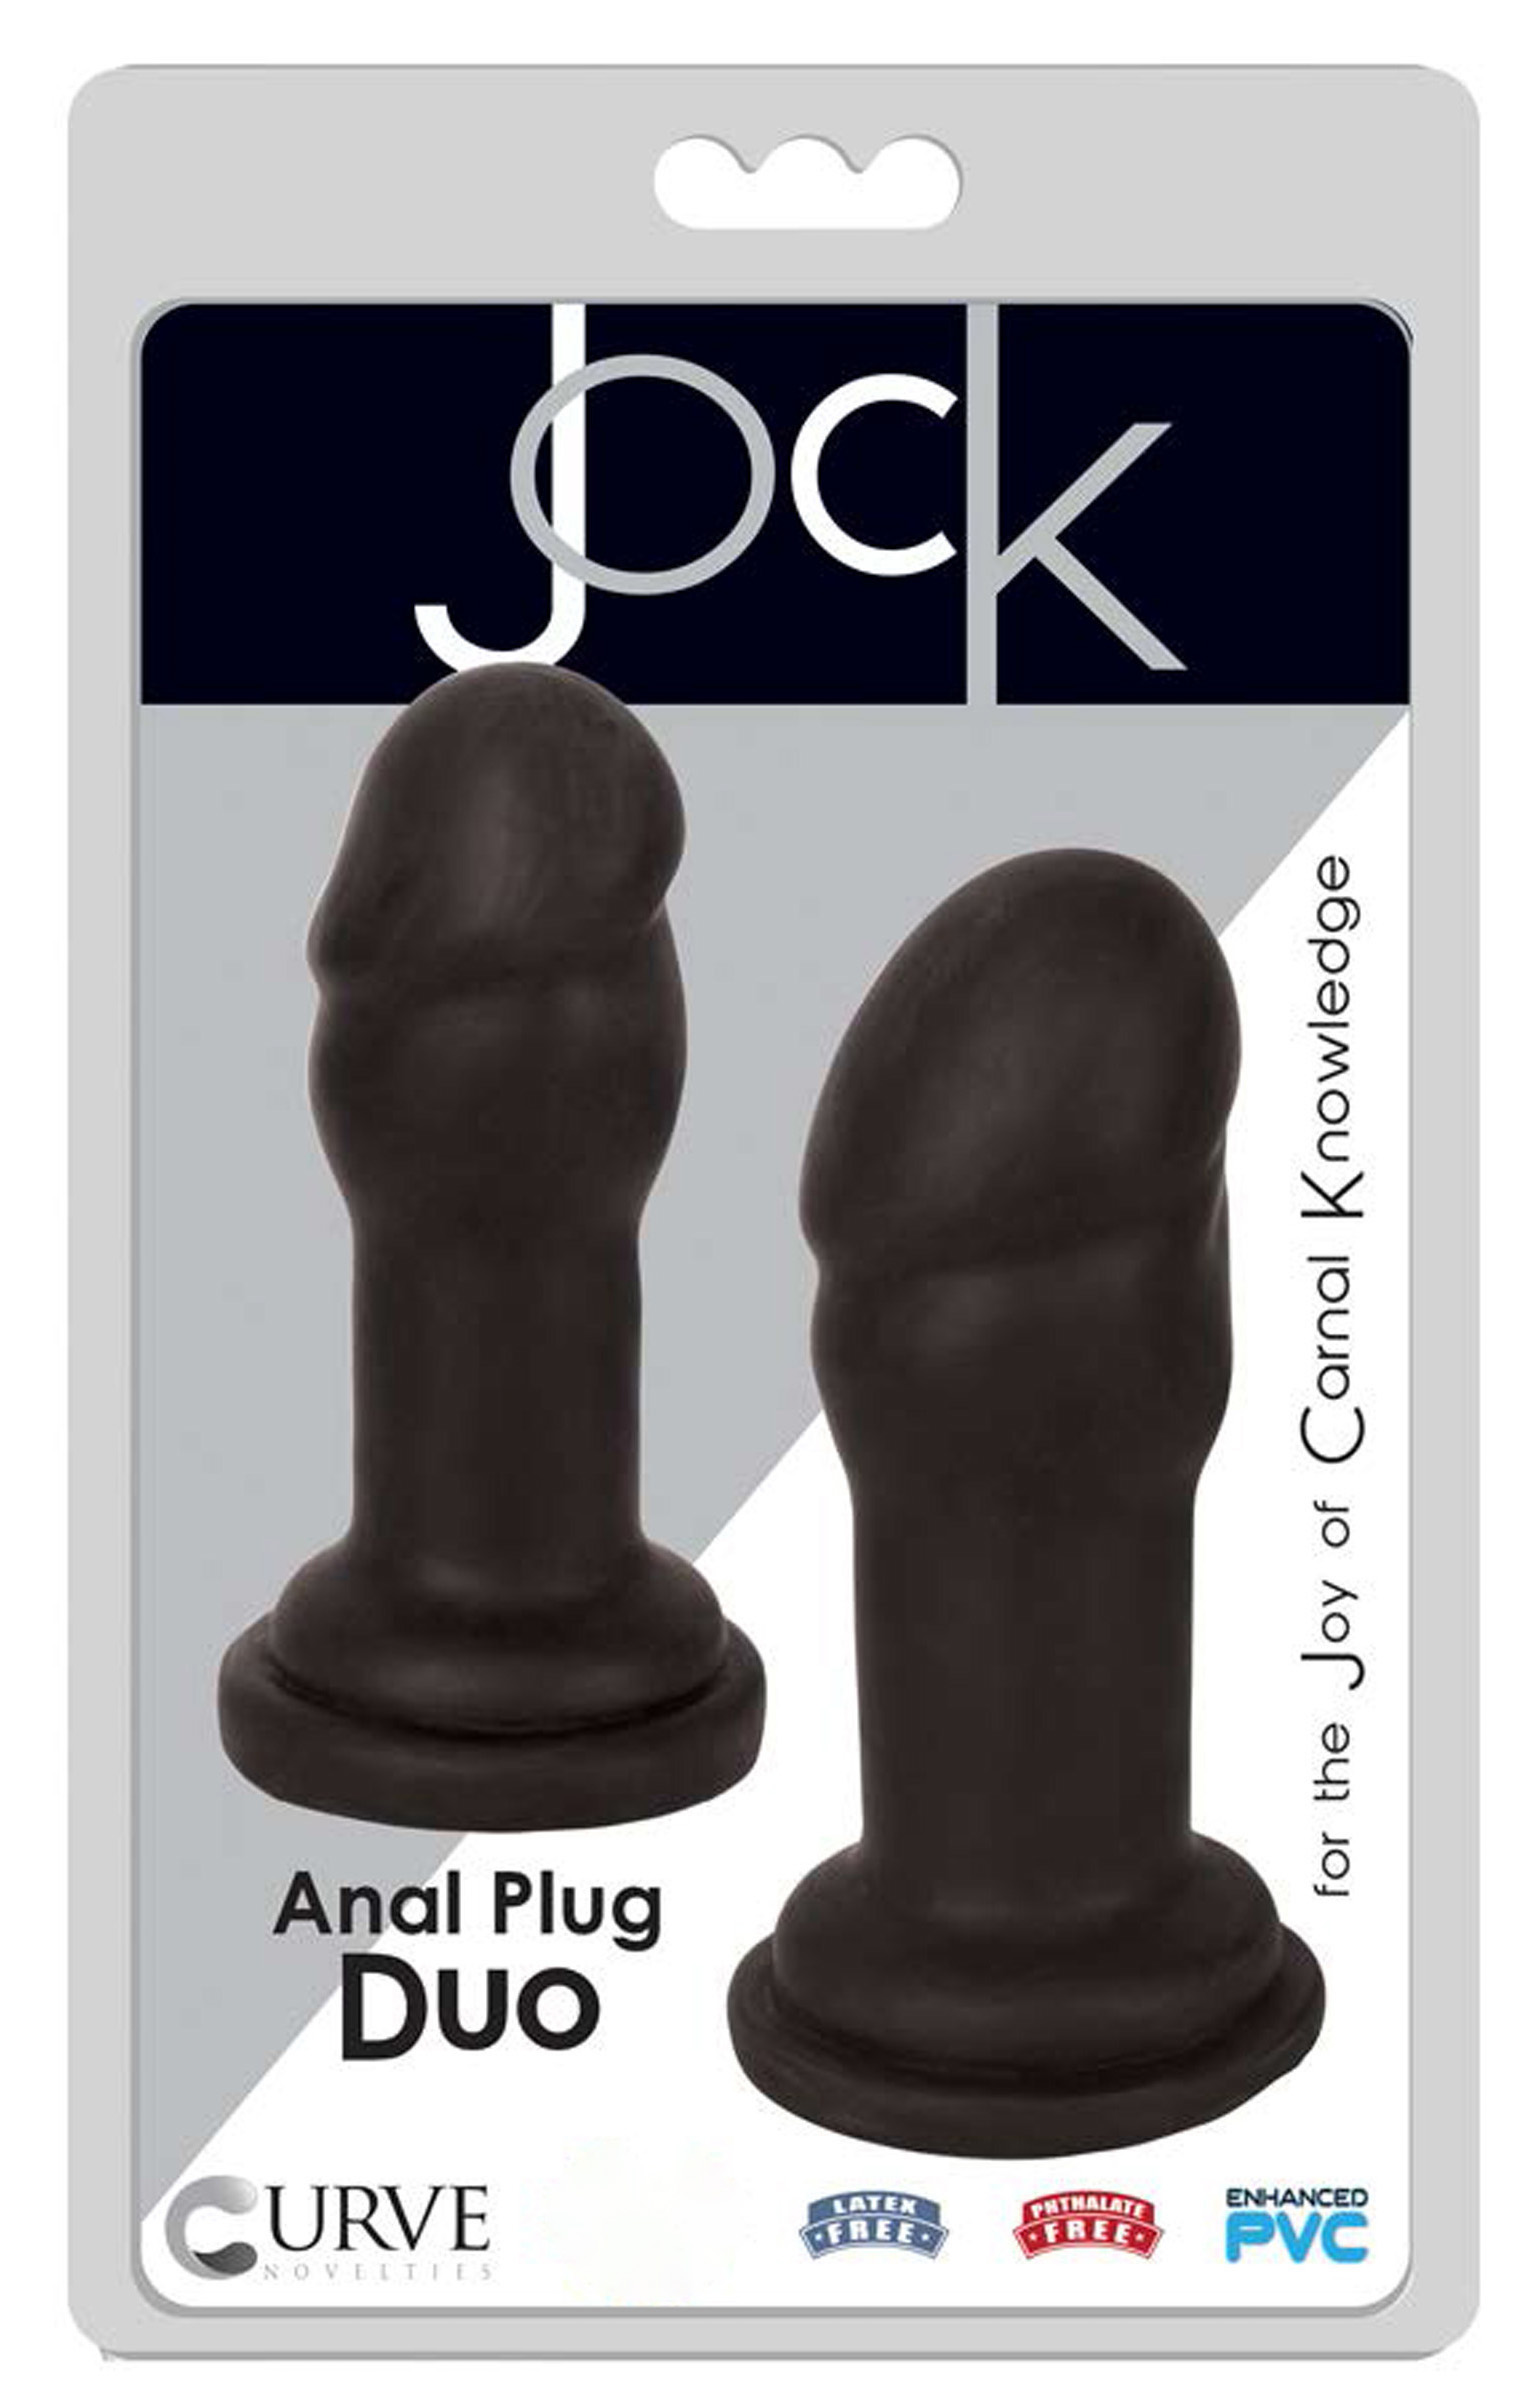 JOCK Anal Plug Duo Black